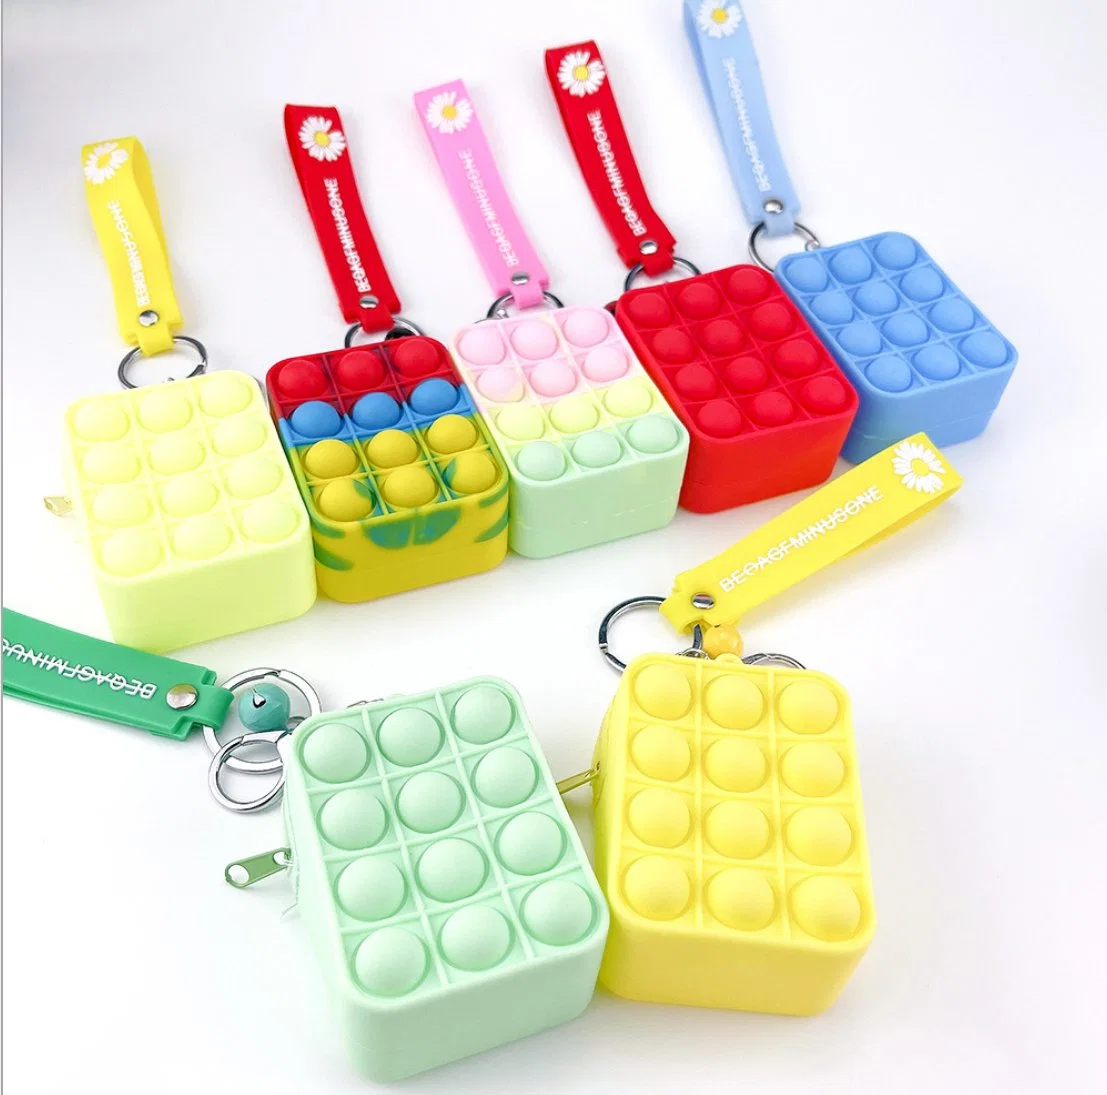 Pop-Brinquedos Figet Coin Bolsas Mini em silicone macio Wallet Bags Filhos de brinquedo